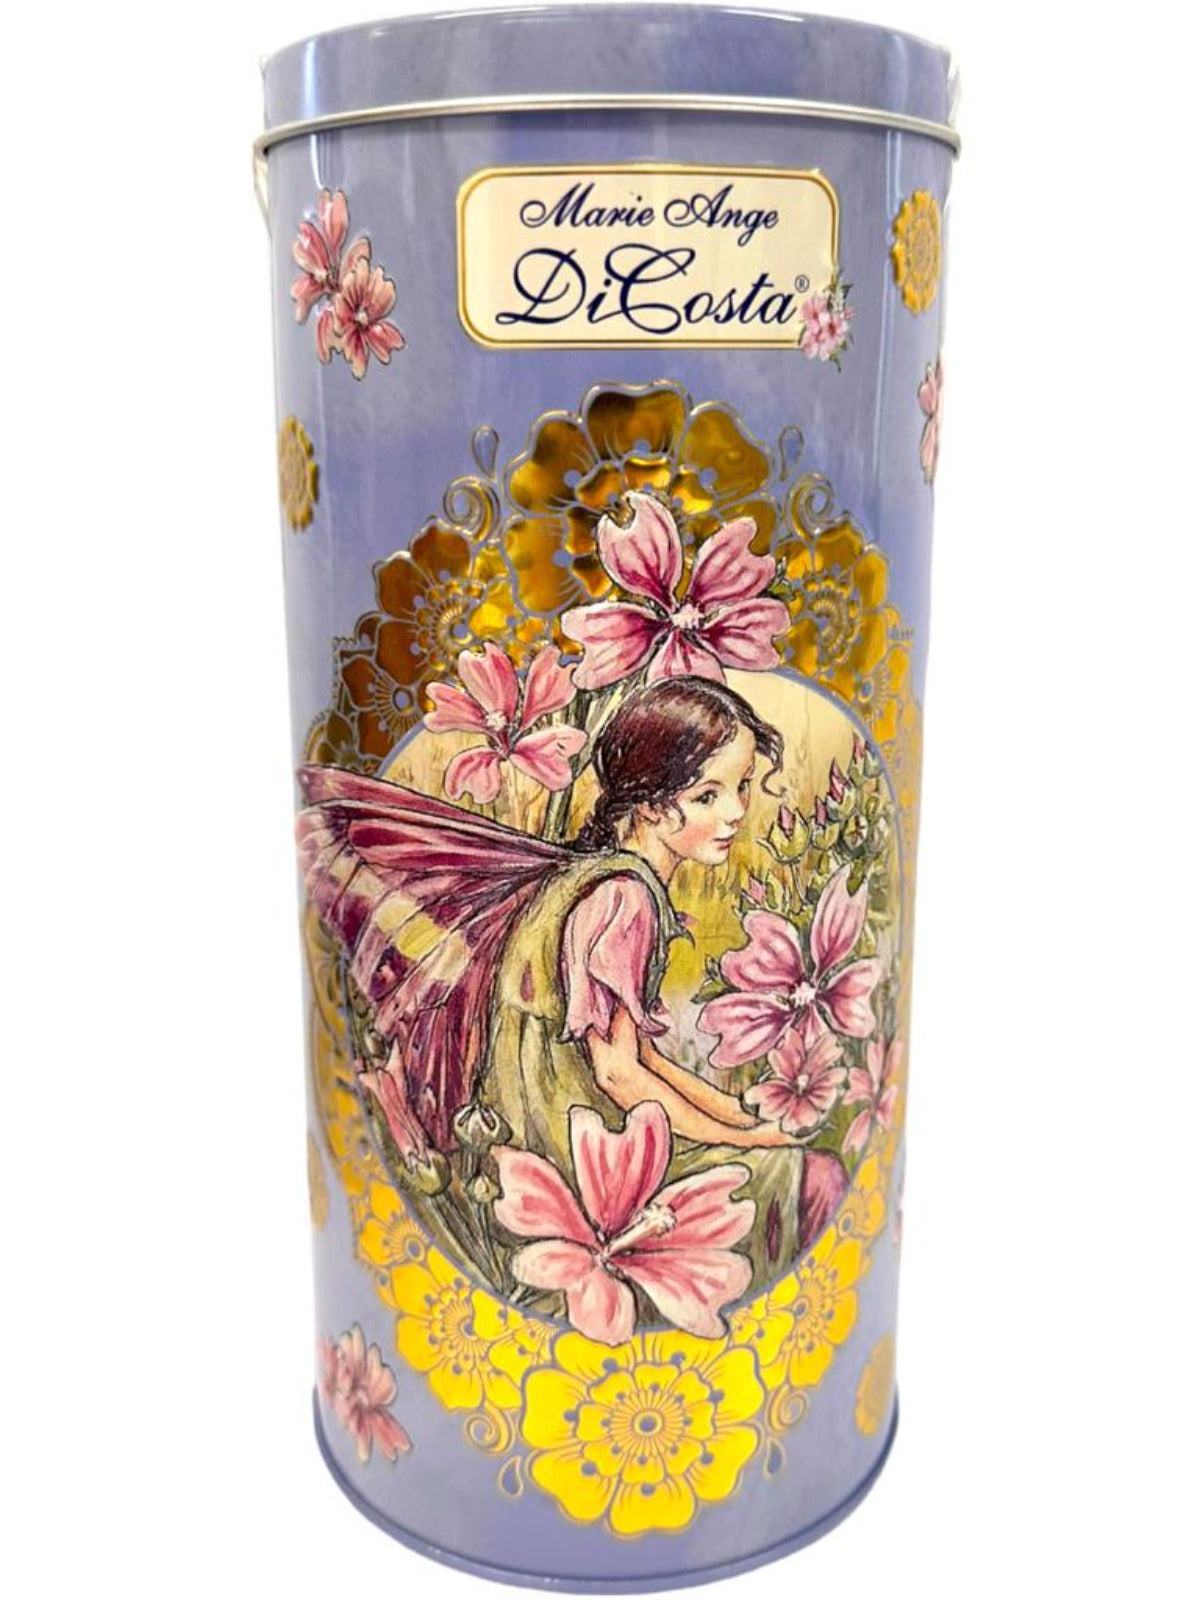 Marie Ange di Costa Flower Fairy Italian Butter Cookies—Il Desiderio in Lilac  150g